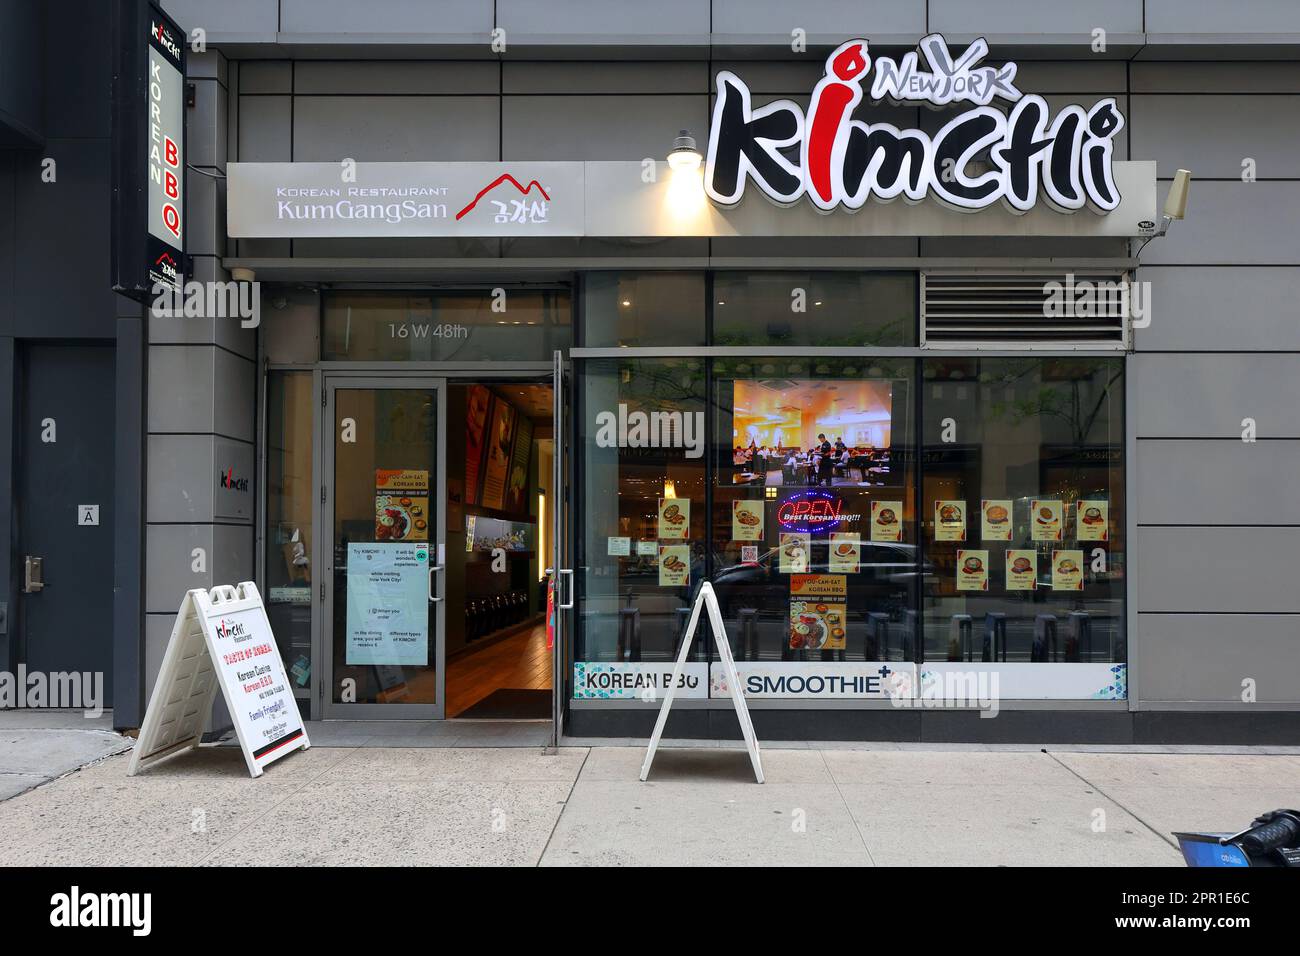 New York Kimchi, 16 W 48th St, New York, NYC storefront photo of a Korean restaurant in Midtown Manhattan. Stock Photo